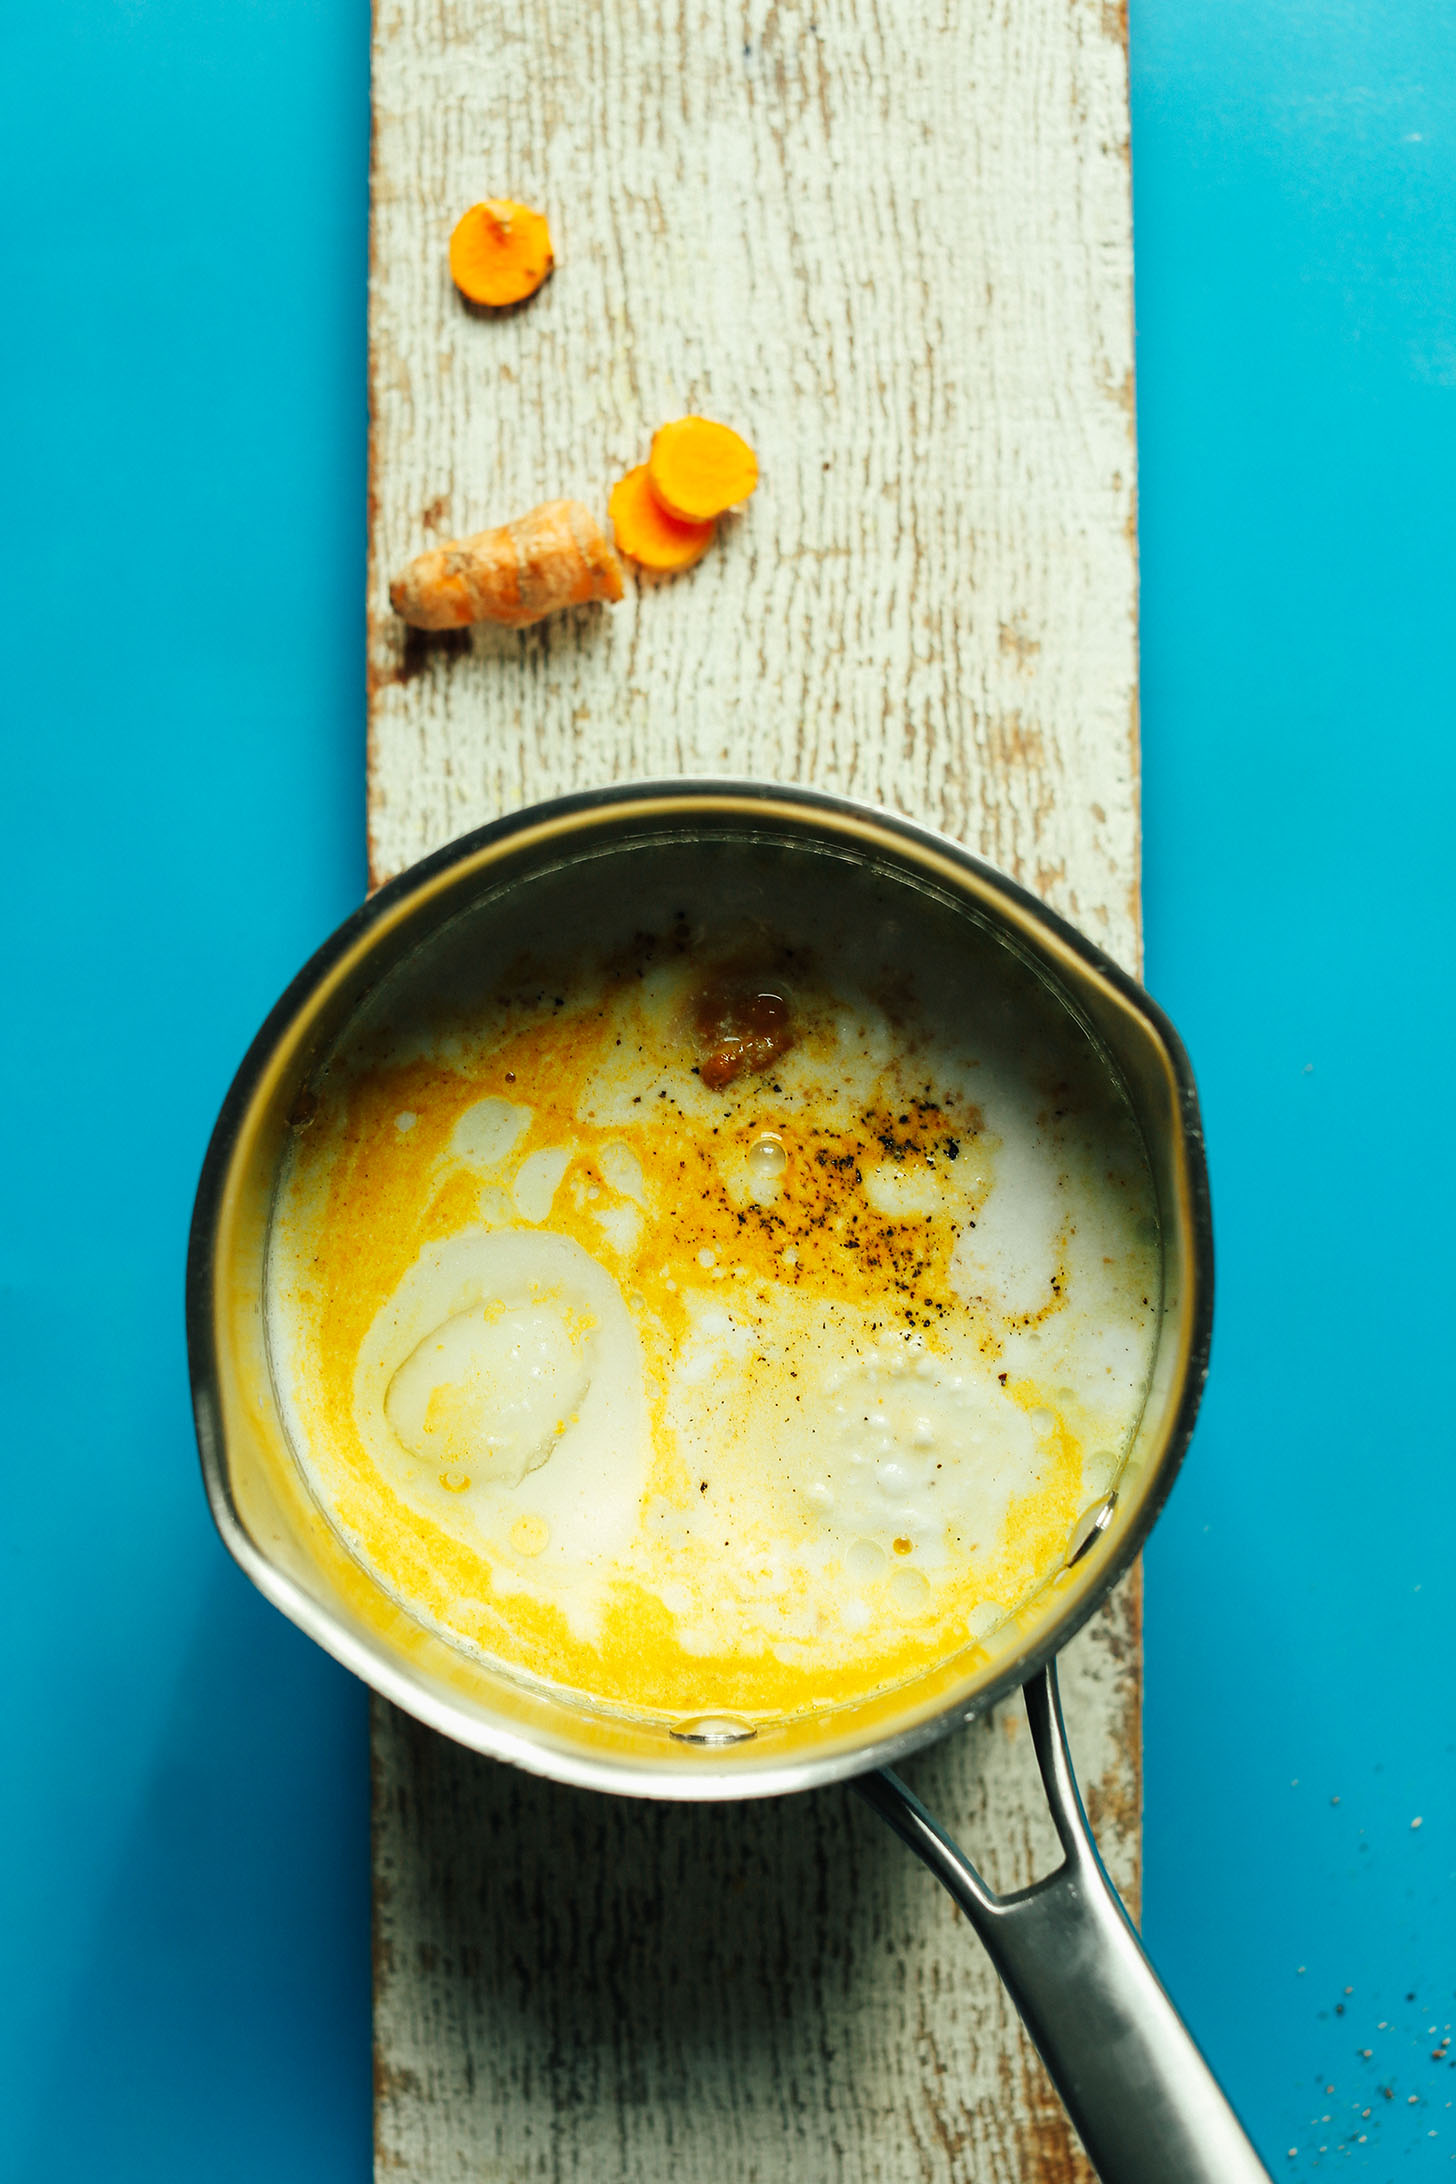 Colorful mug of Creamy Vegan Golden milk displayed on a wood plank with fresh turmeric